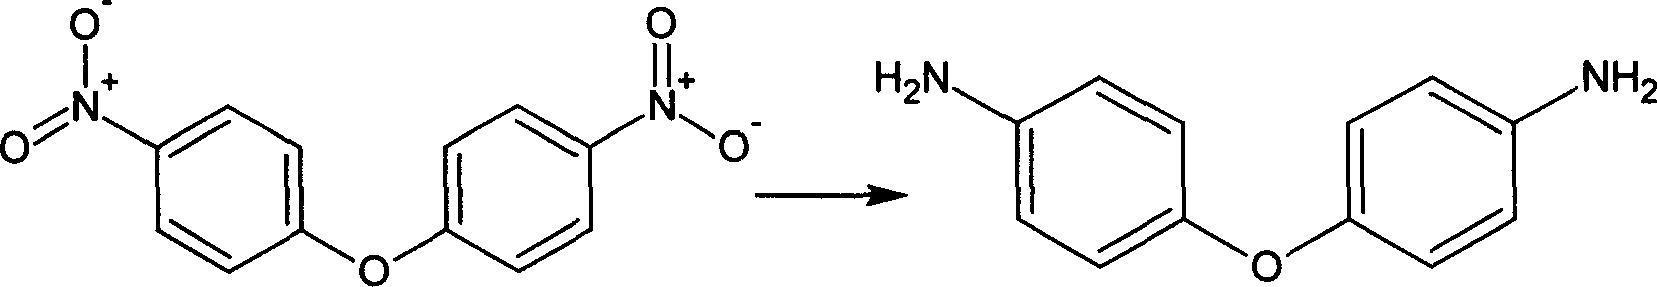 Process for preparing 4,4'-diamino diphenyl ether